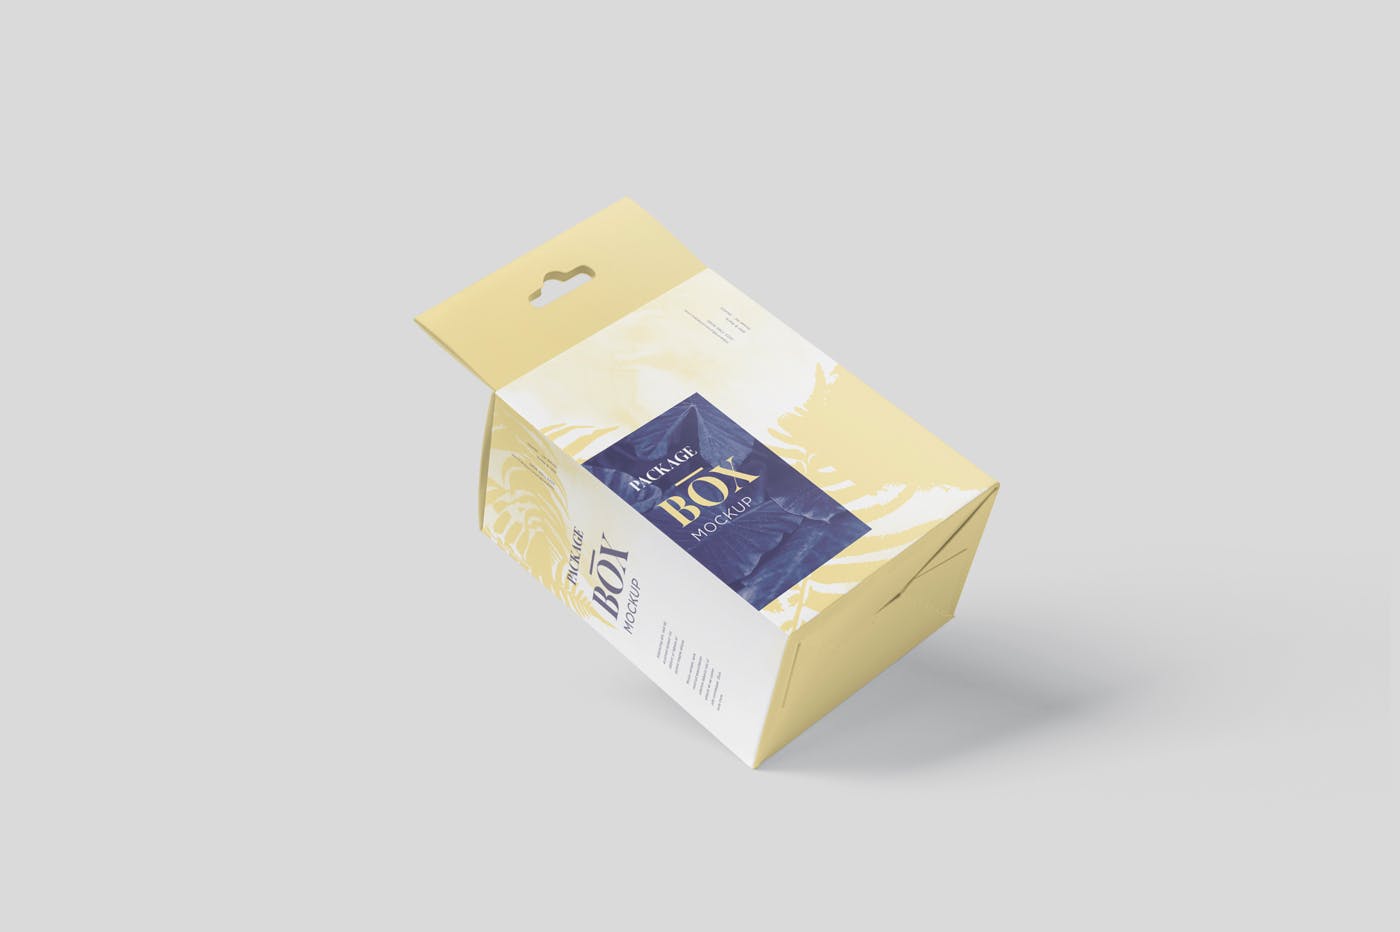 挂耳式扁平矩形包装盒素材中国精选模板 Package Box Mockup Set – Slim Square with Hanger插图(3)